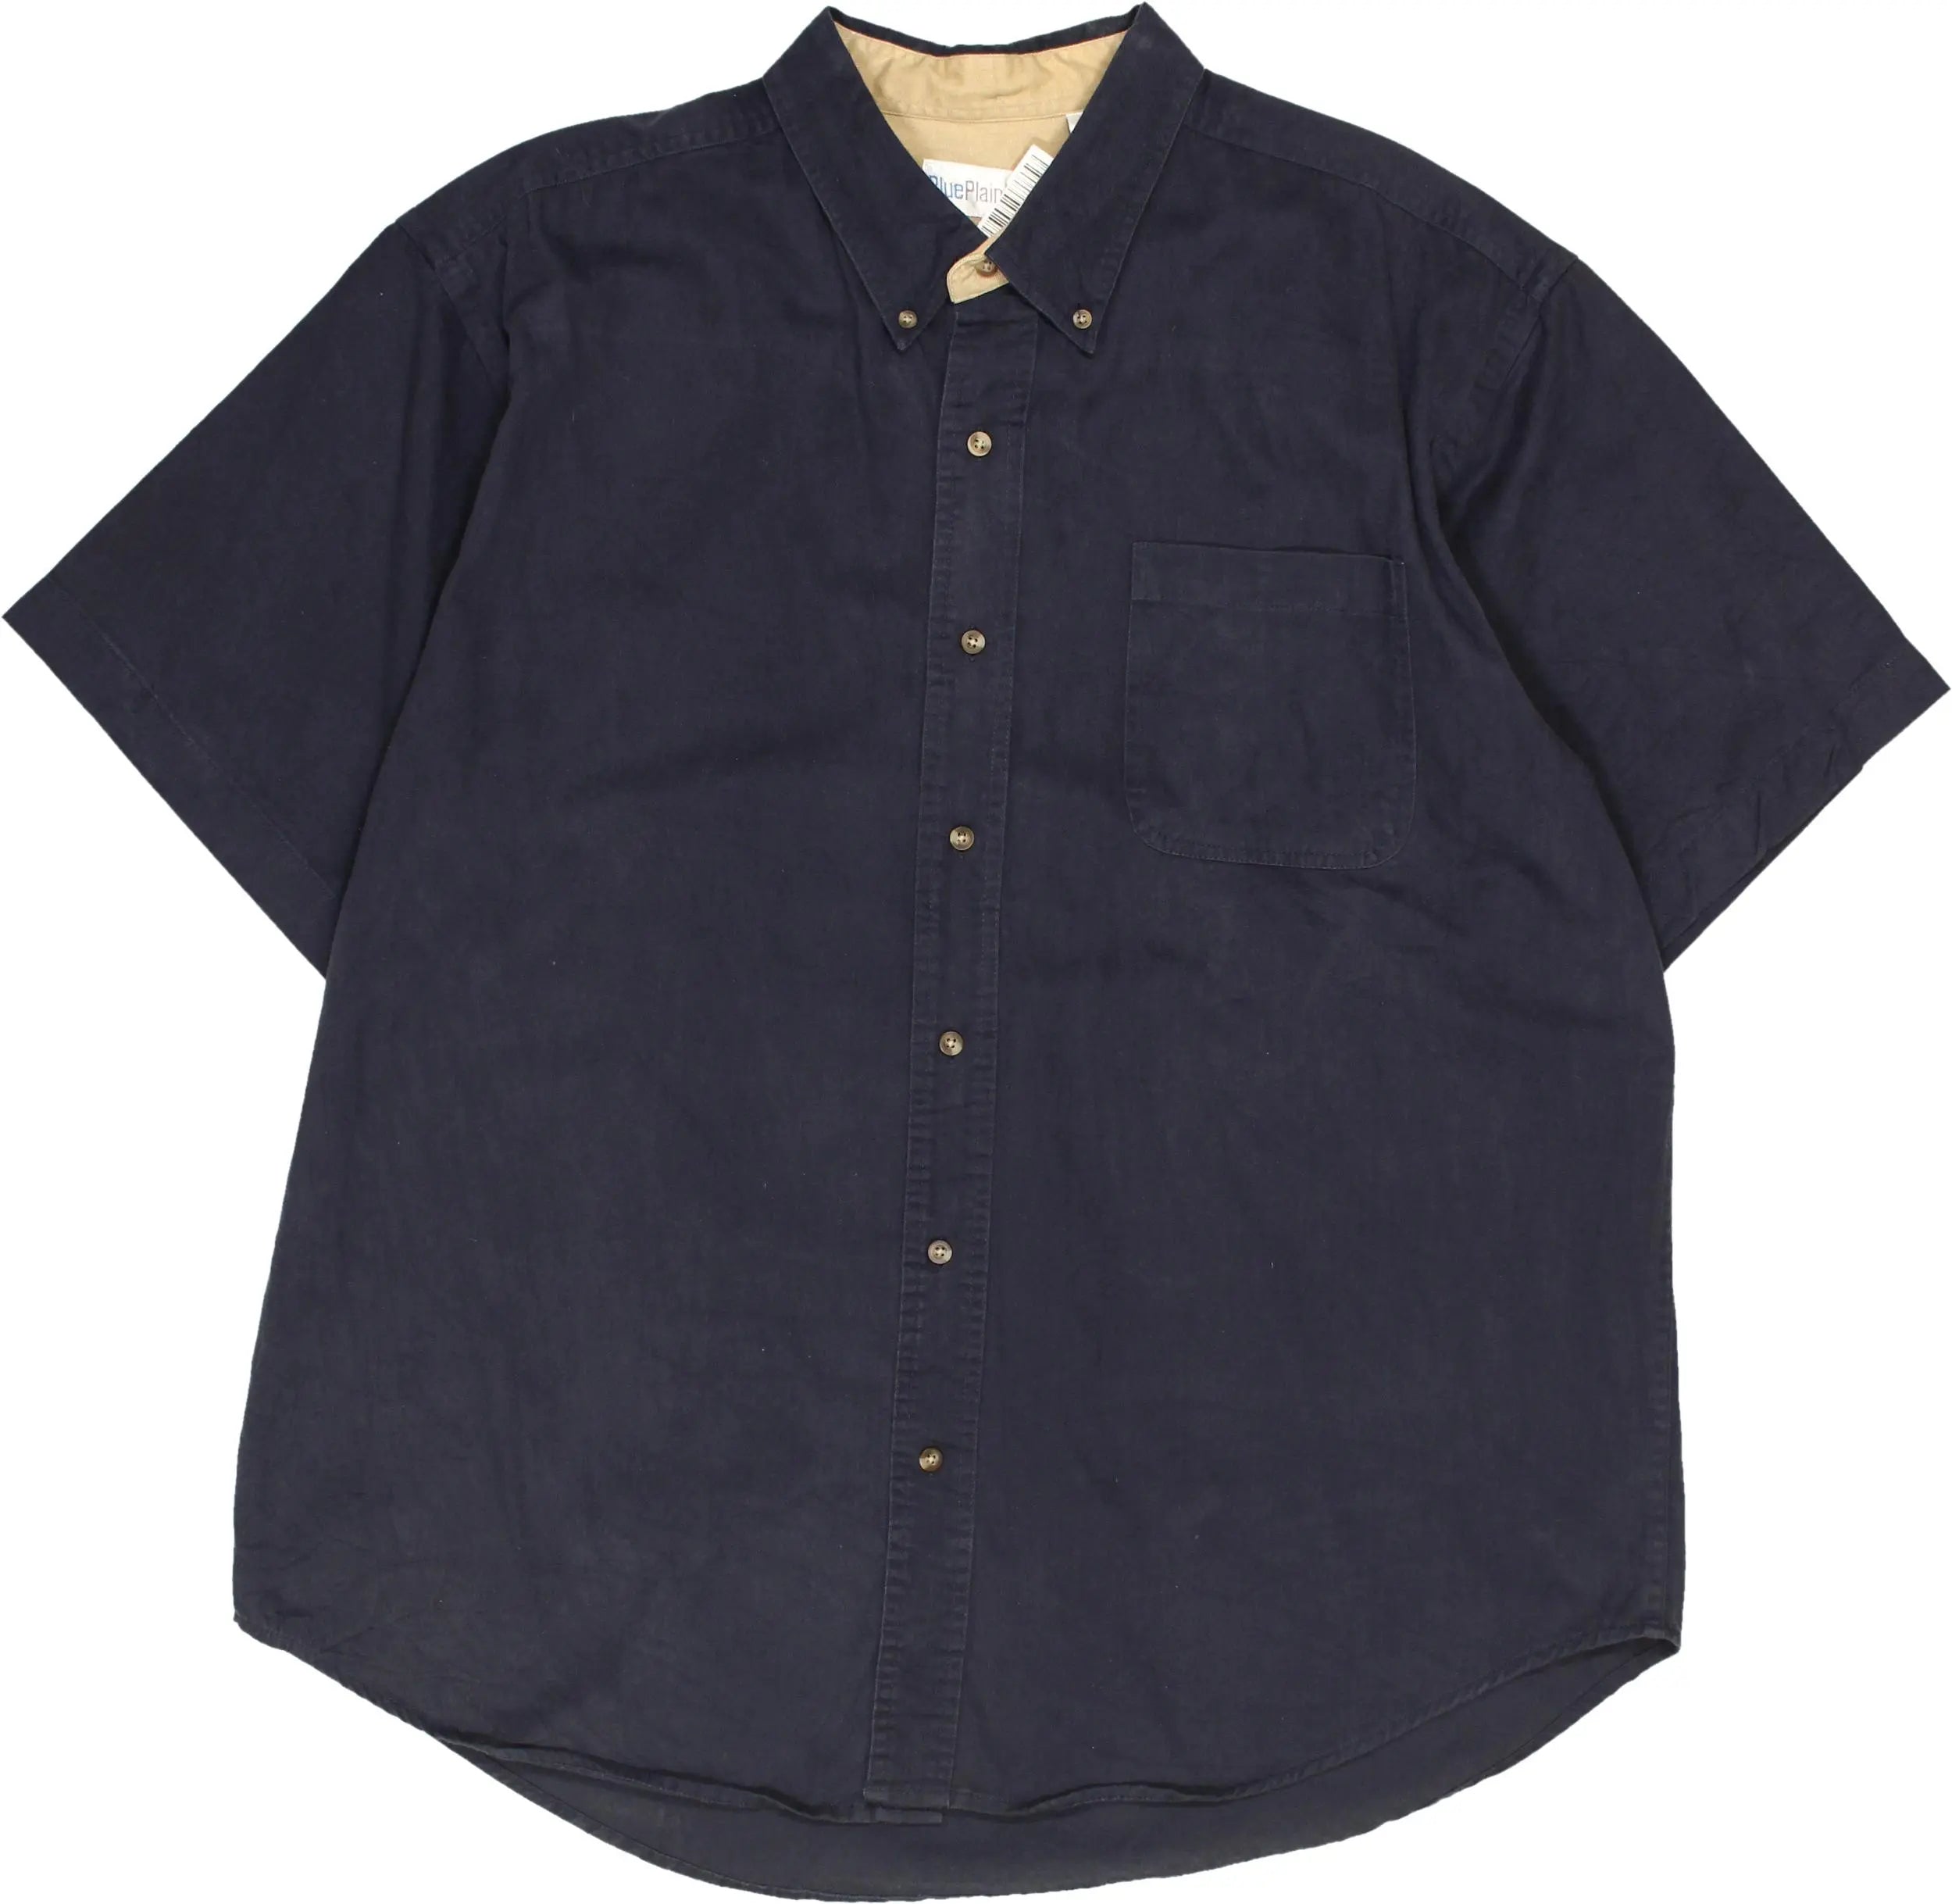 Blue Plains - Shirt- ThriftTale.com - Vintage and second handclothing